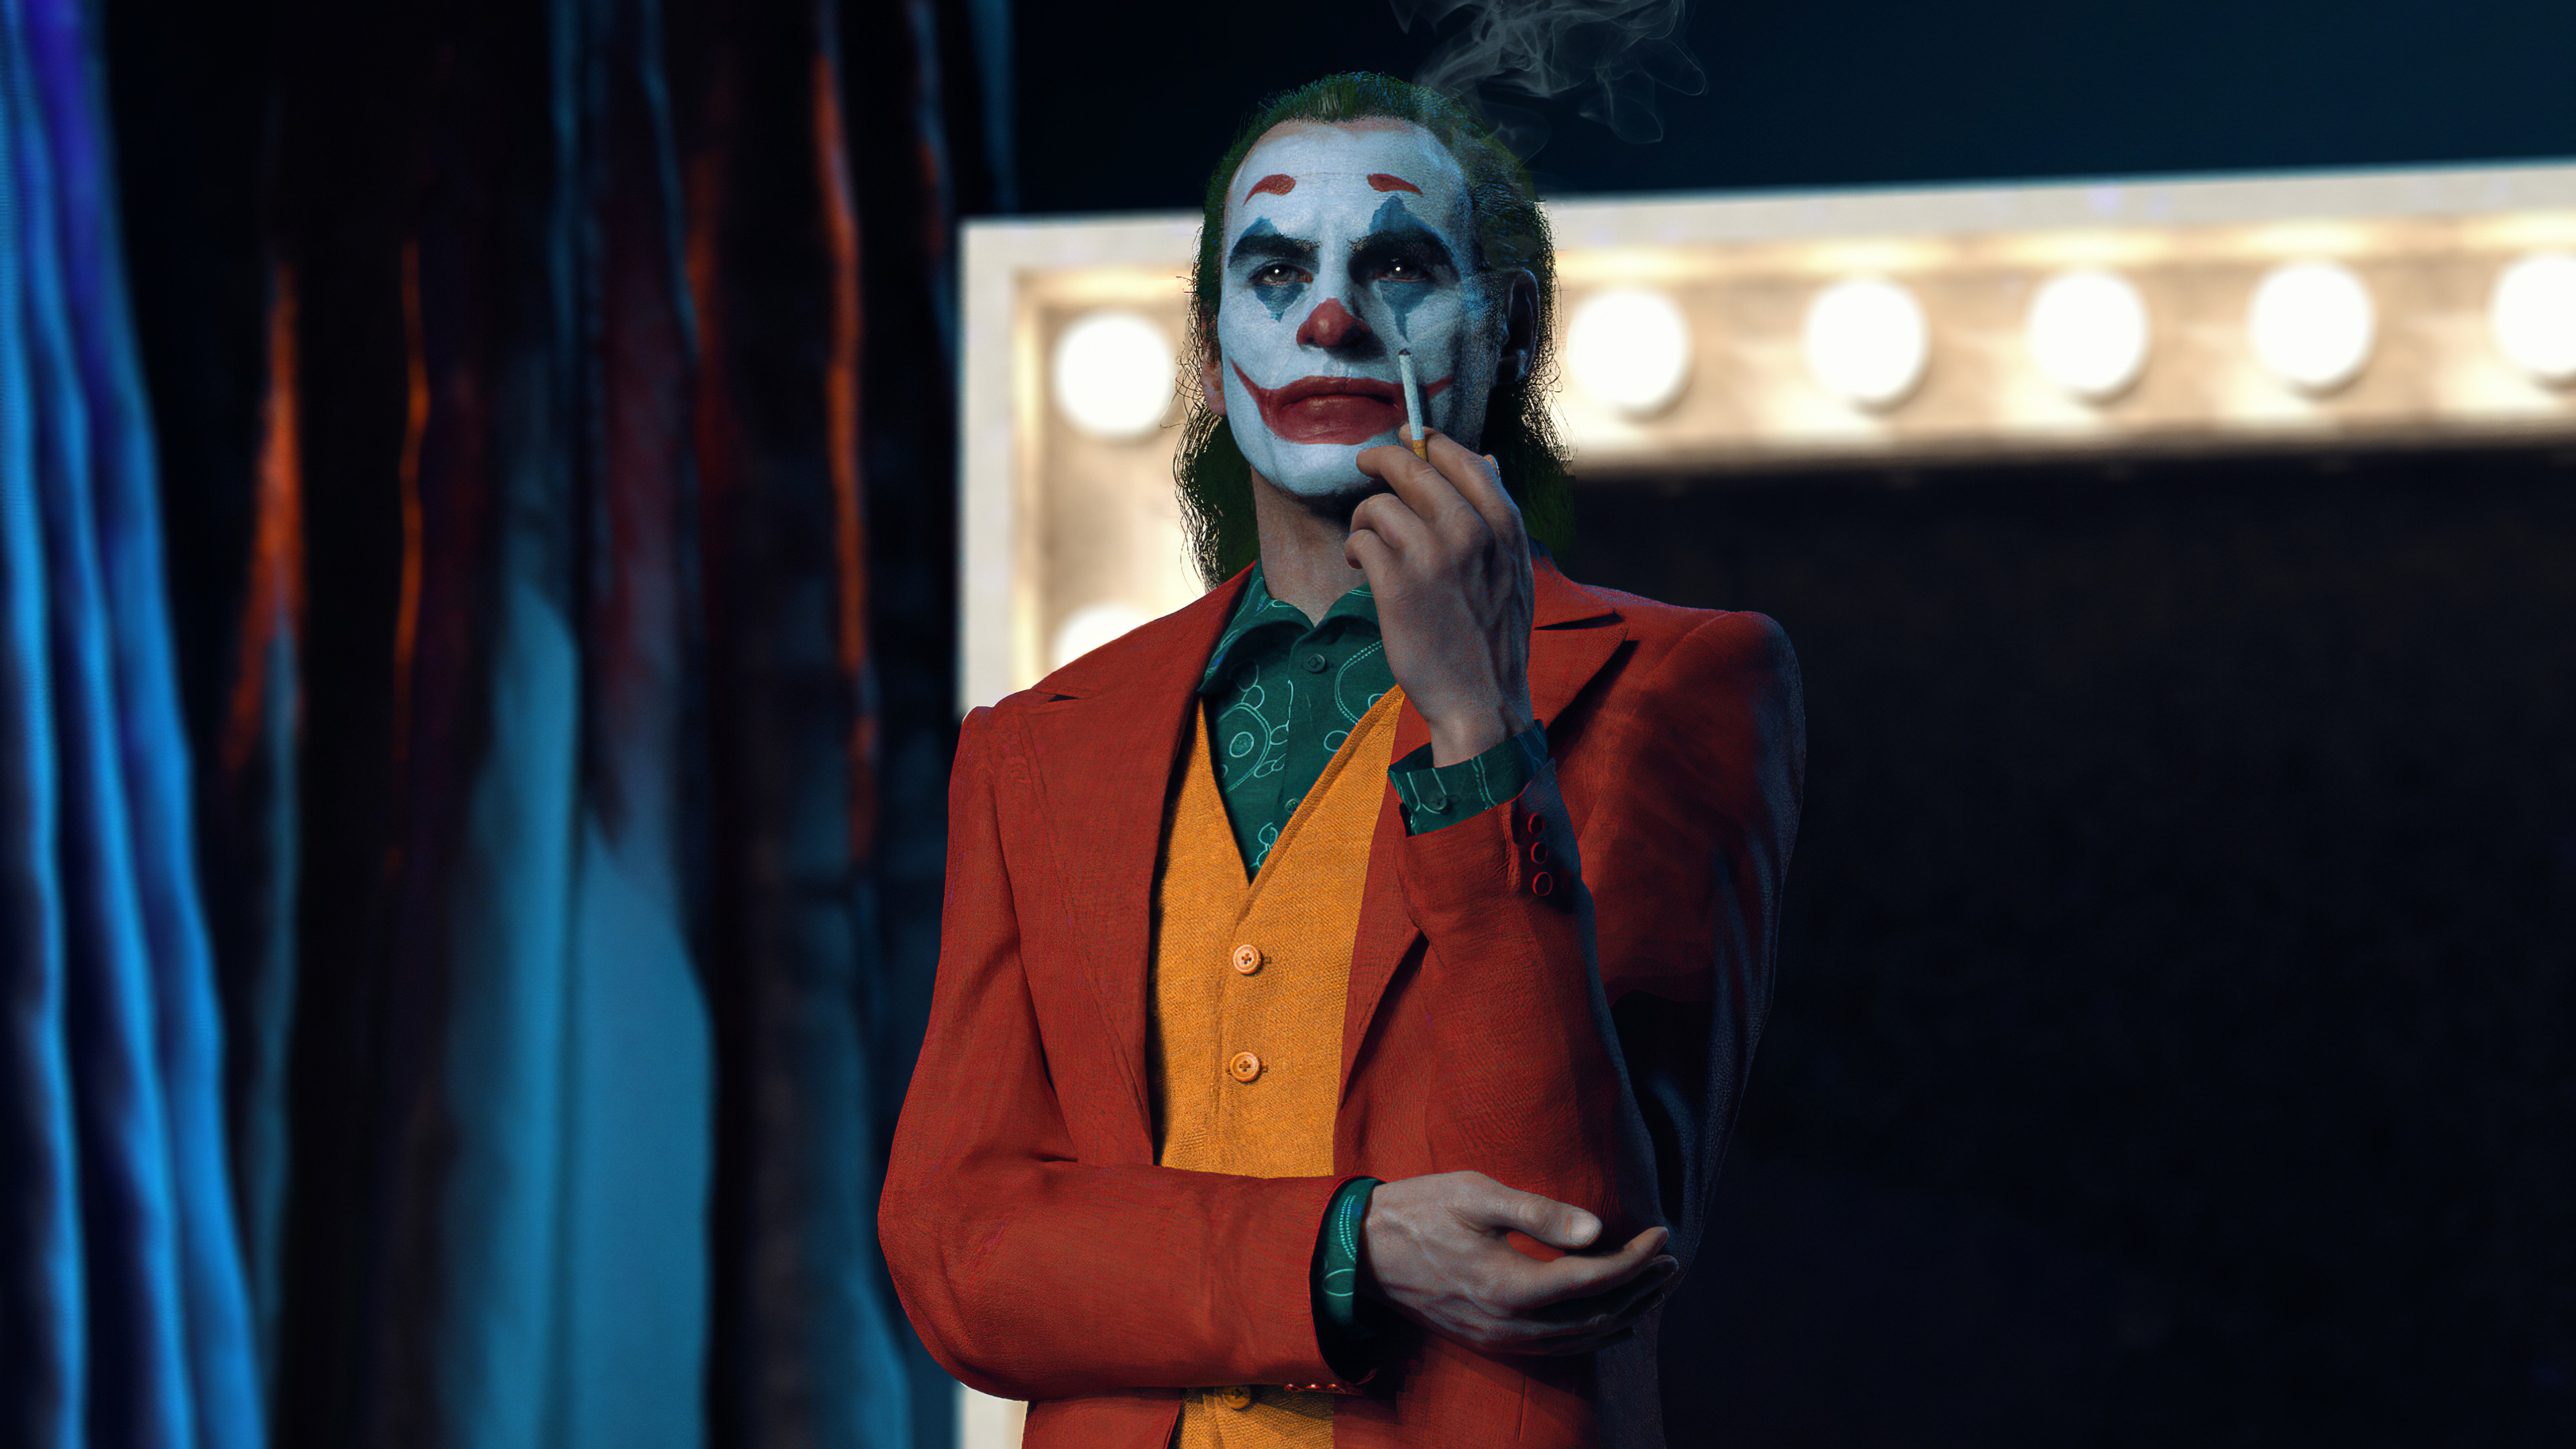 Joaquin Joker Art - Joaquin Phoenix Joker 4k - HD Wallpaper 